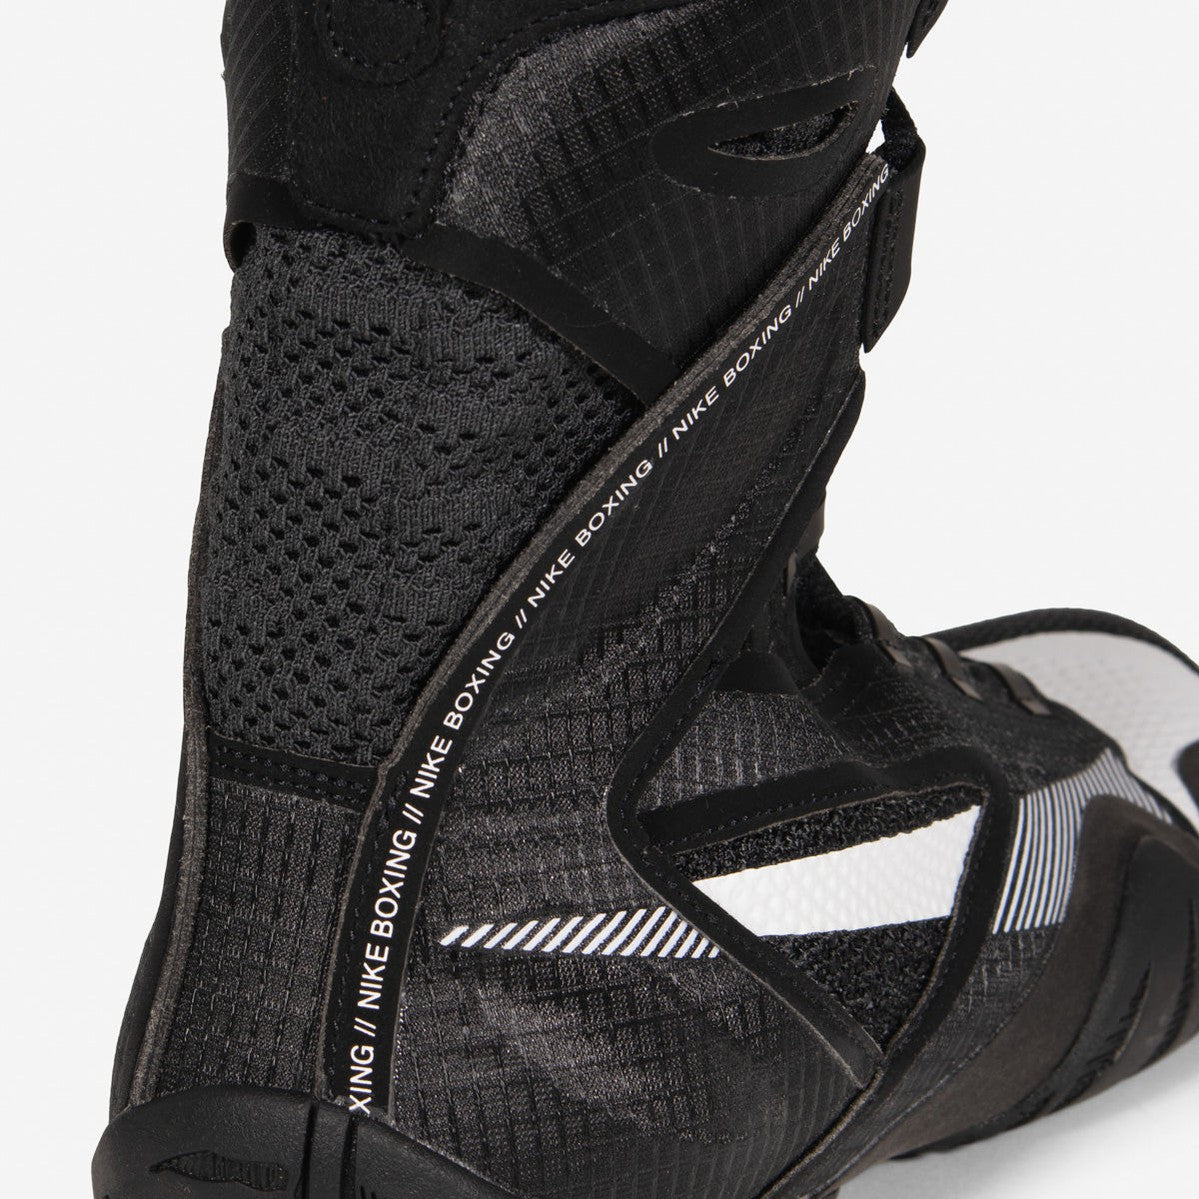 Boxing shoes Nike Hyperko 2.0 Black-White